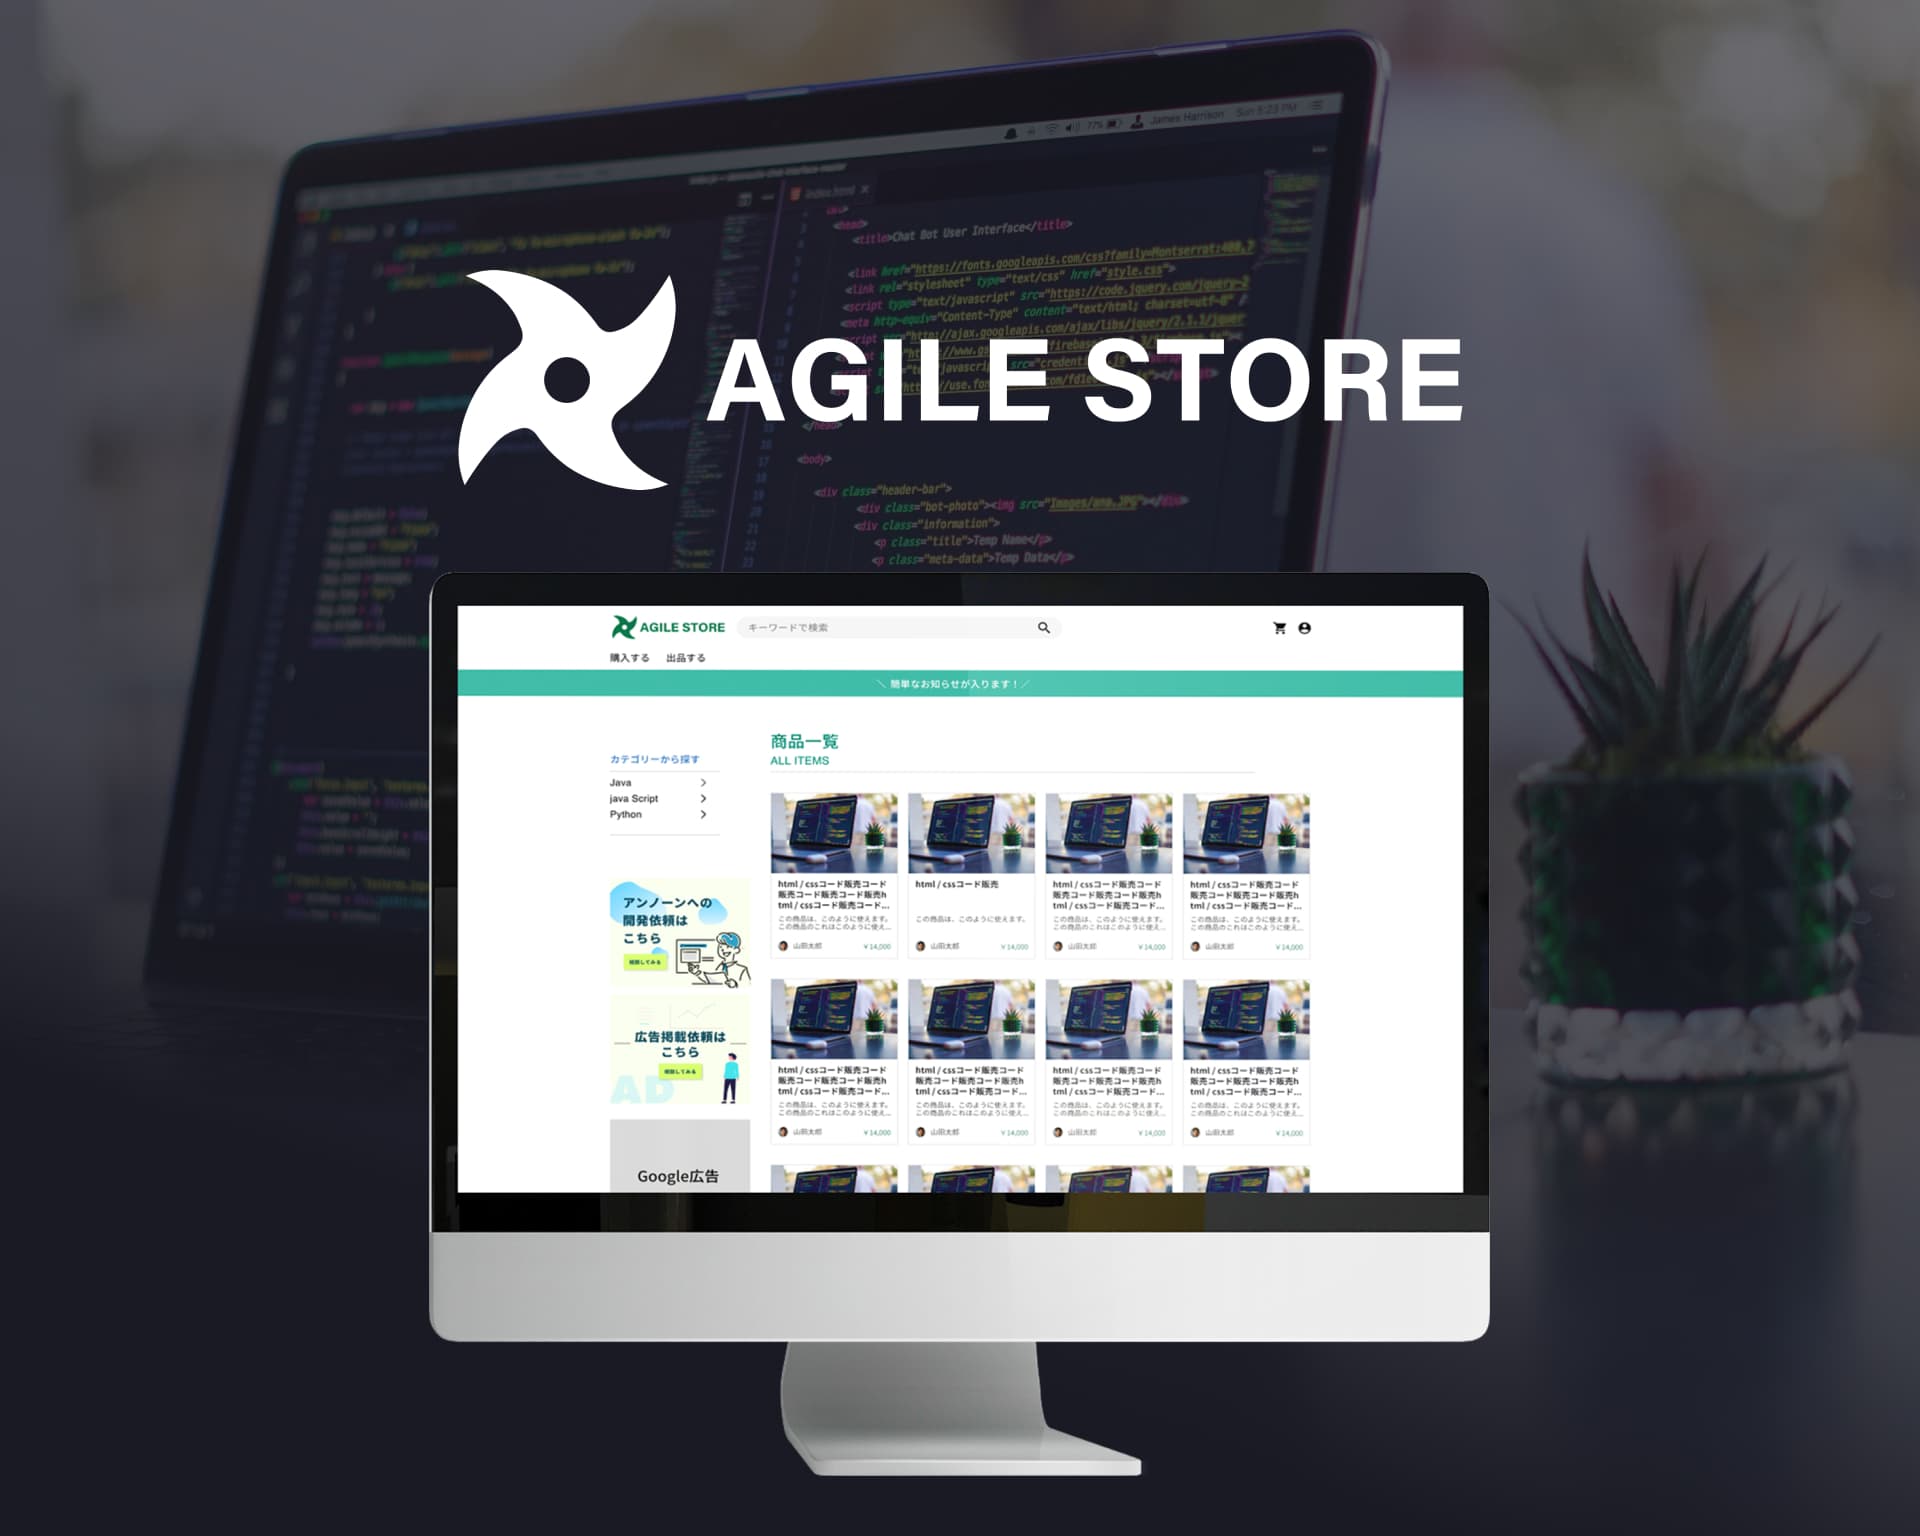 Agile Store